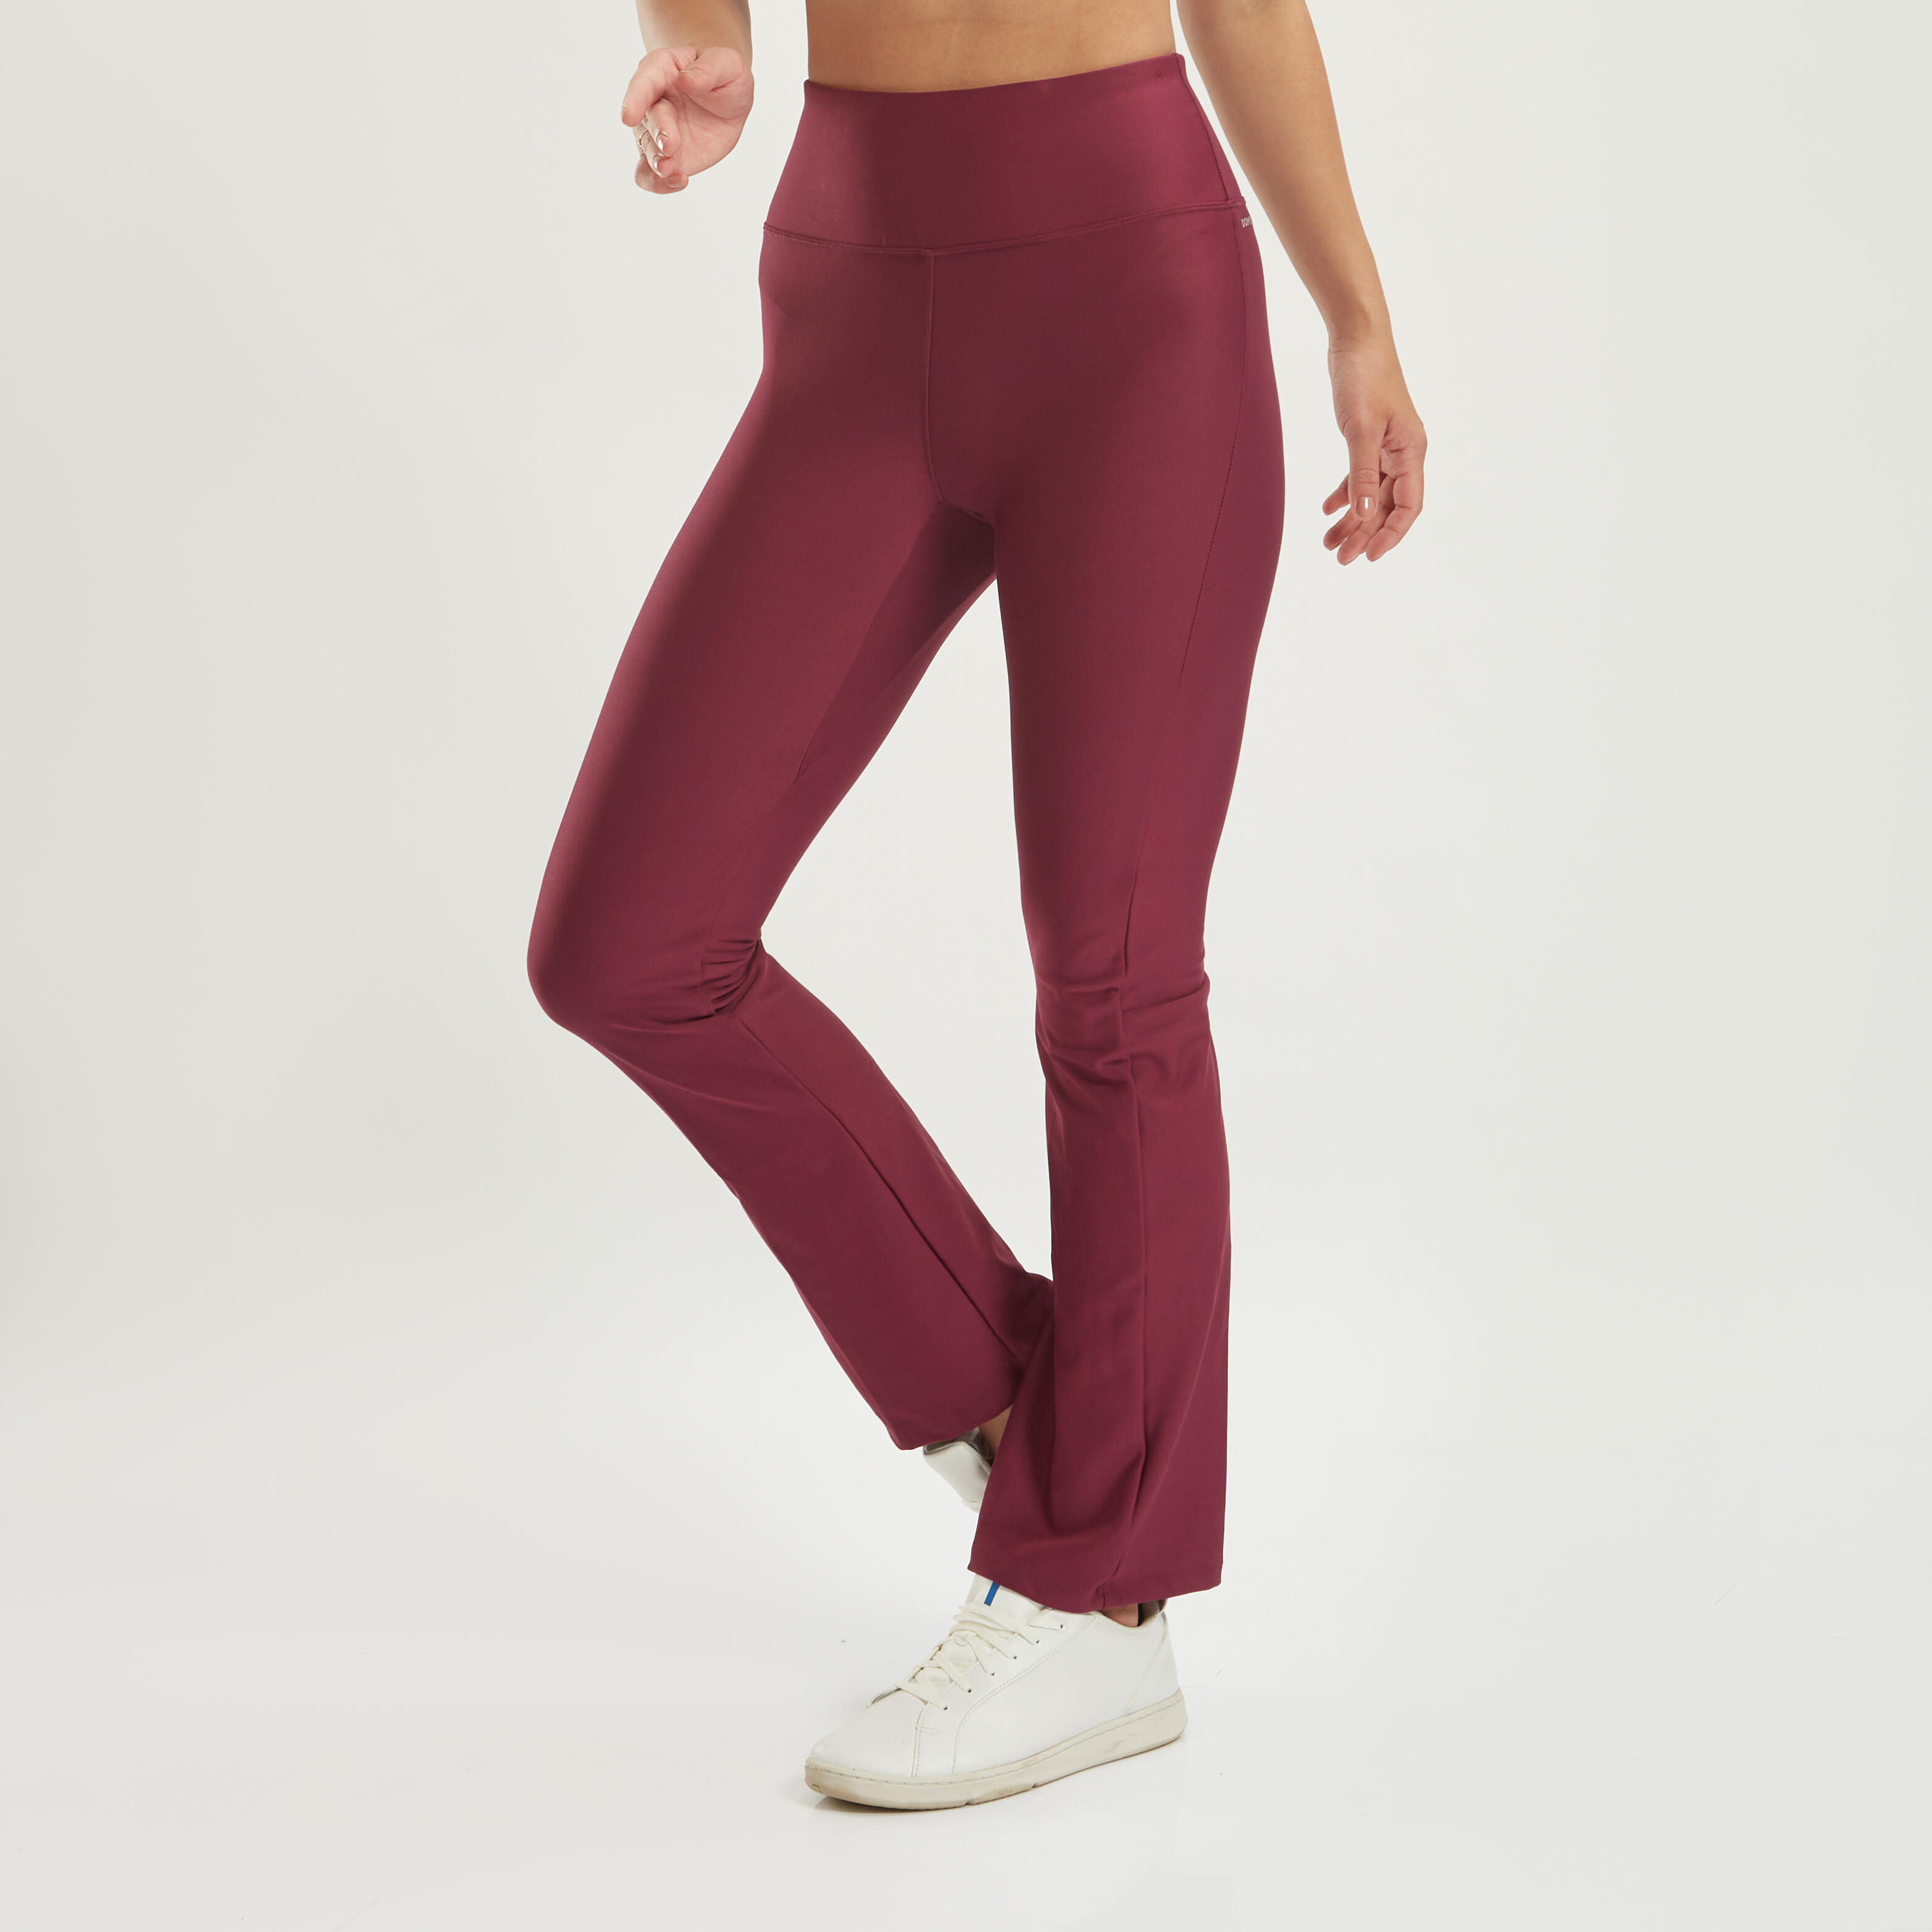 Burgundy leggings gym outfit | Burgundy leggings, Gym outfit, White crop  top tank